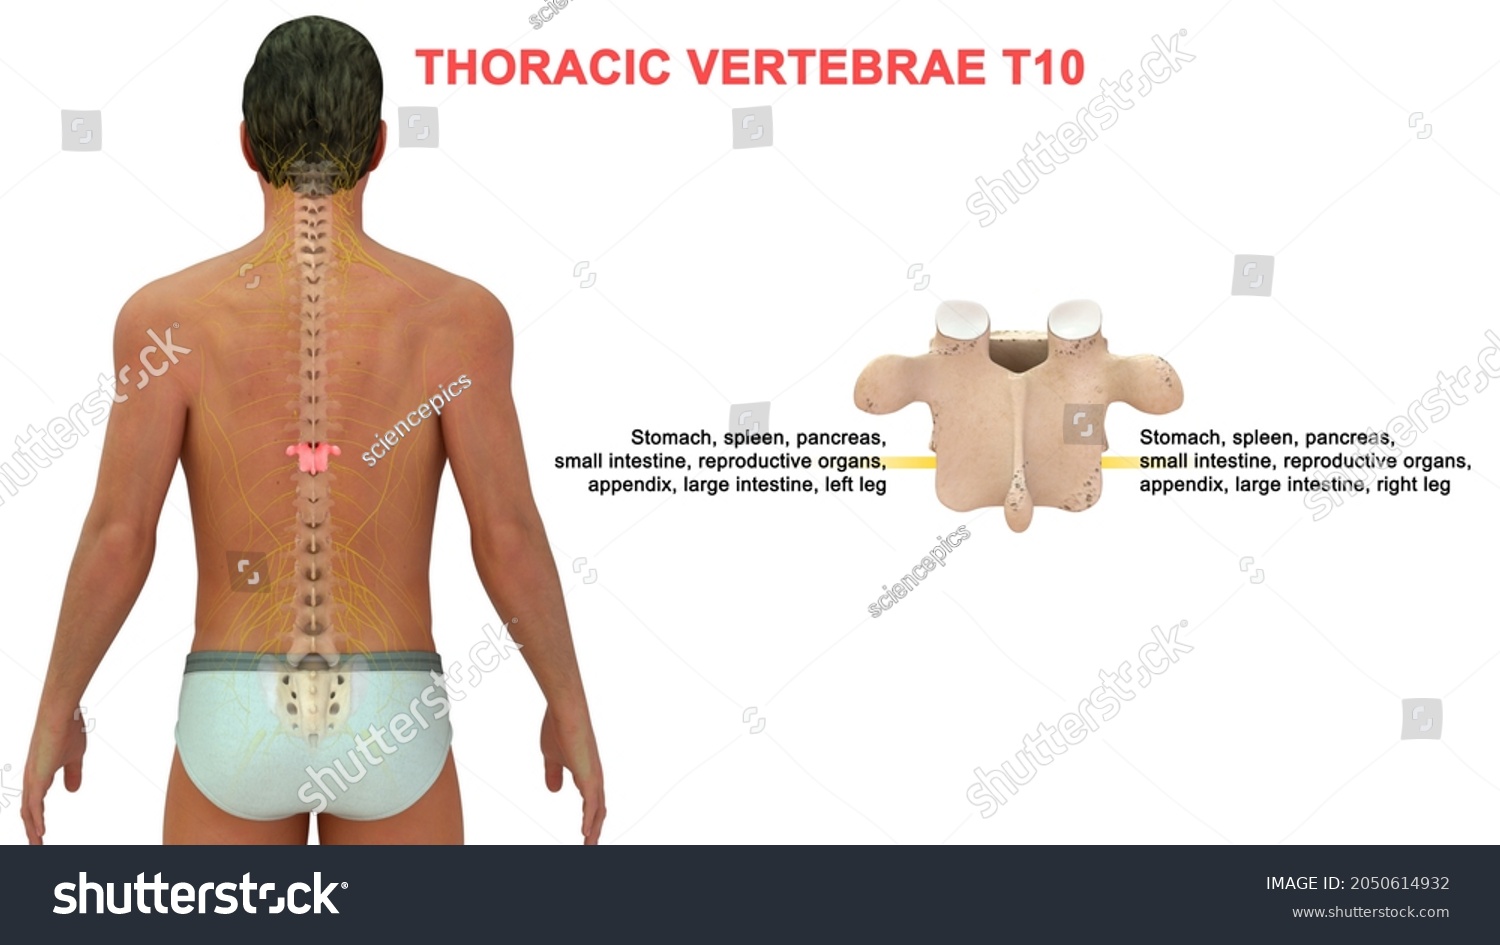 Thoracic Vertebrae T10 Bone Anatomy Labeled Stock Illustration 2050614932 Shutterstock 0045